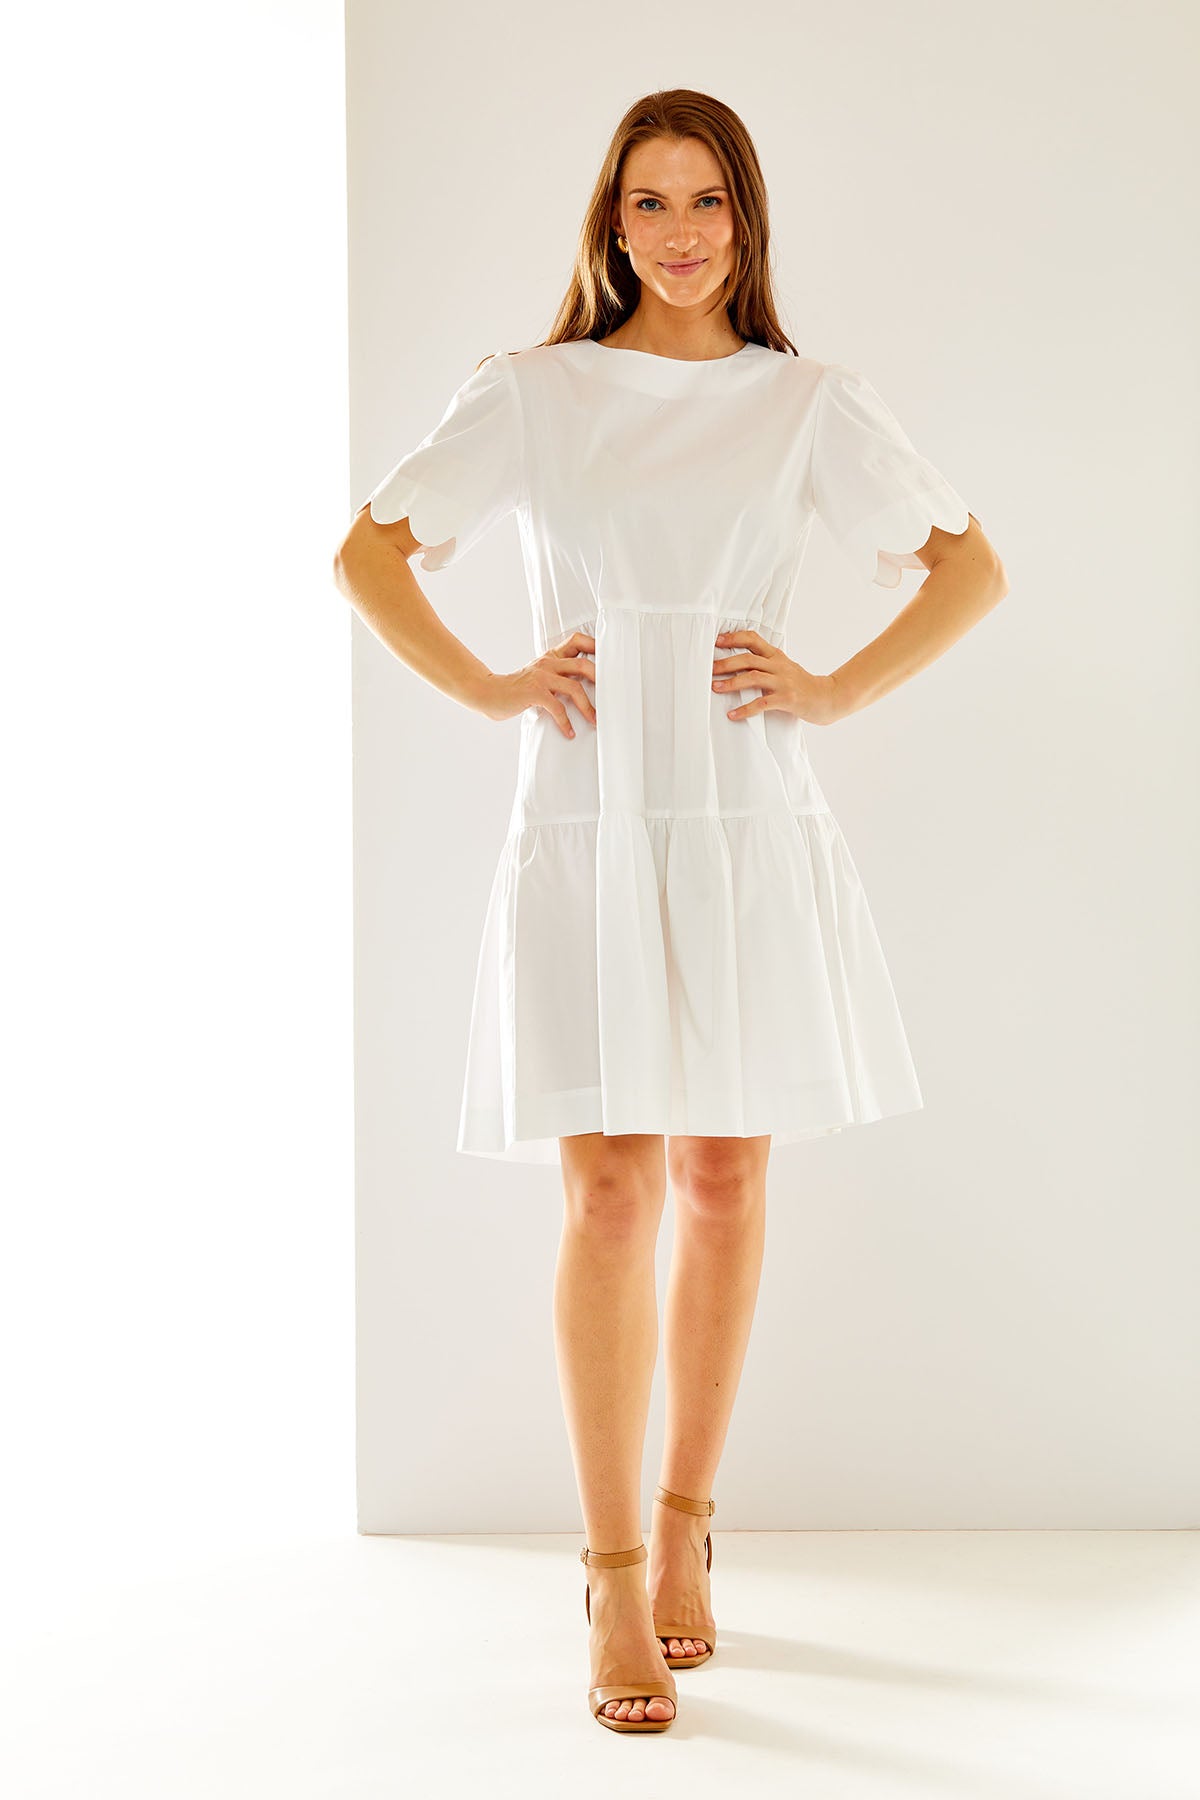 Woman in white scallop dress